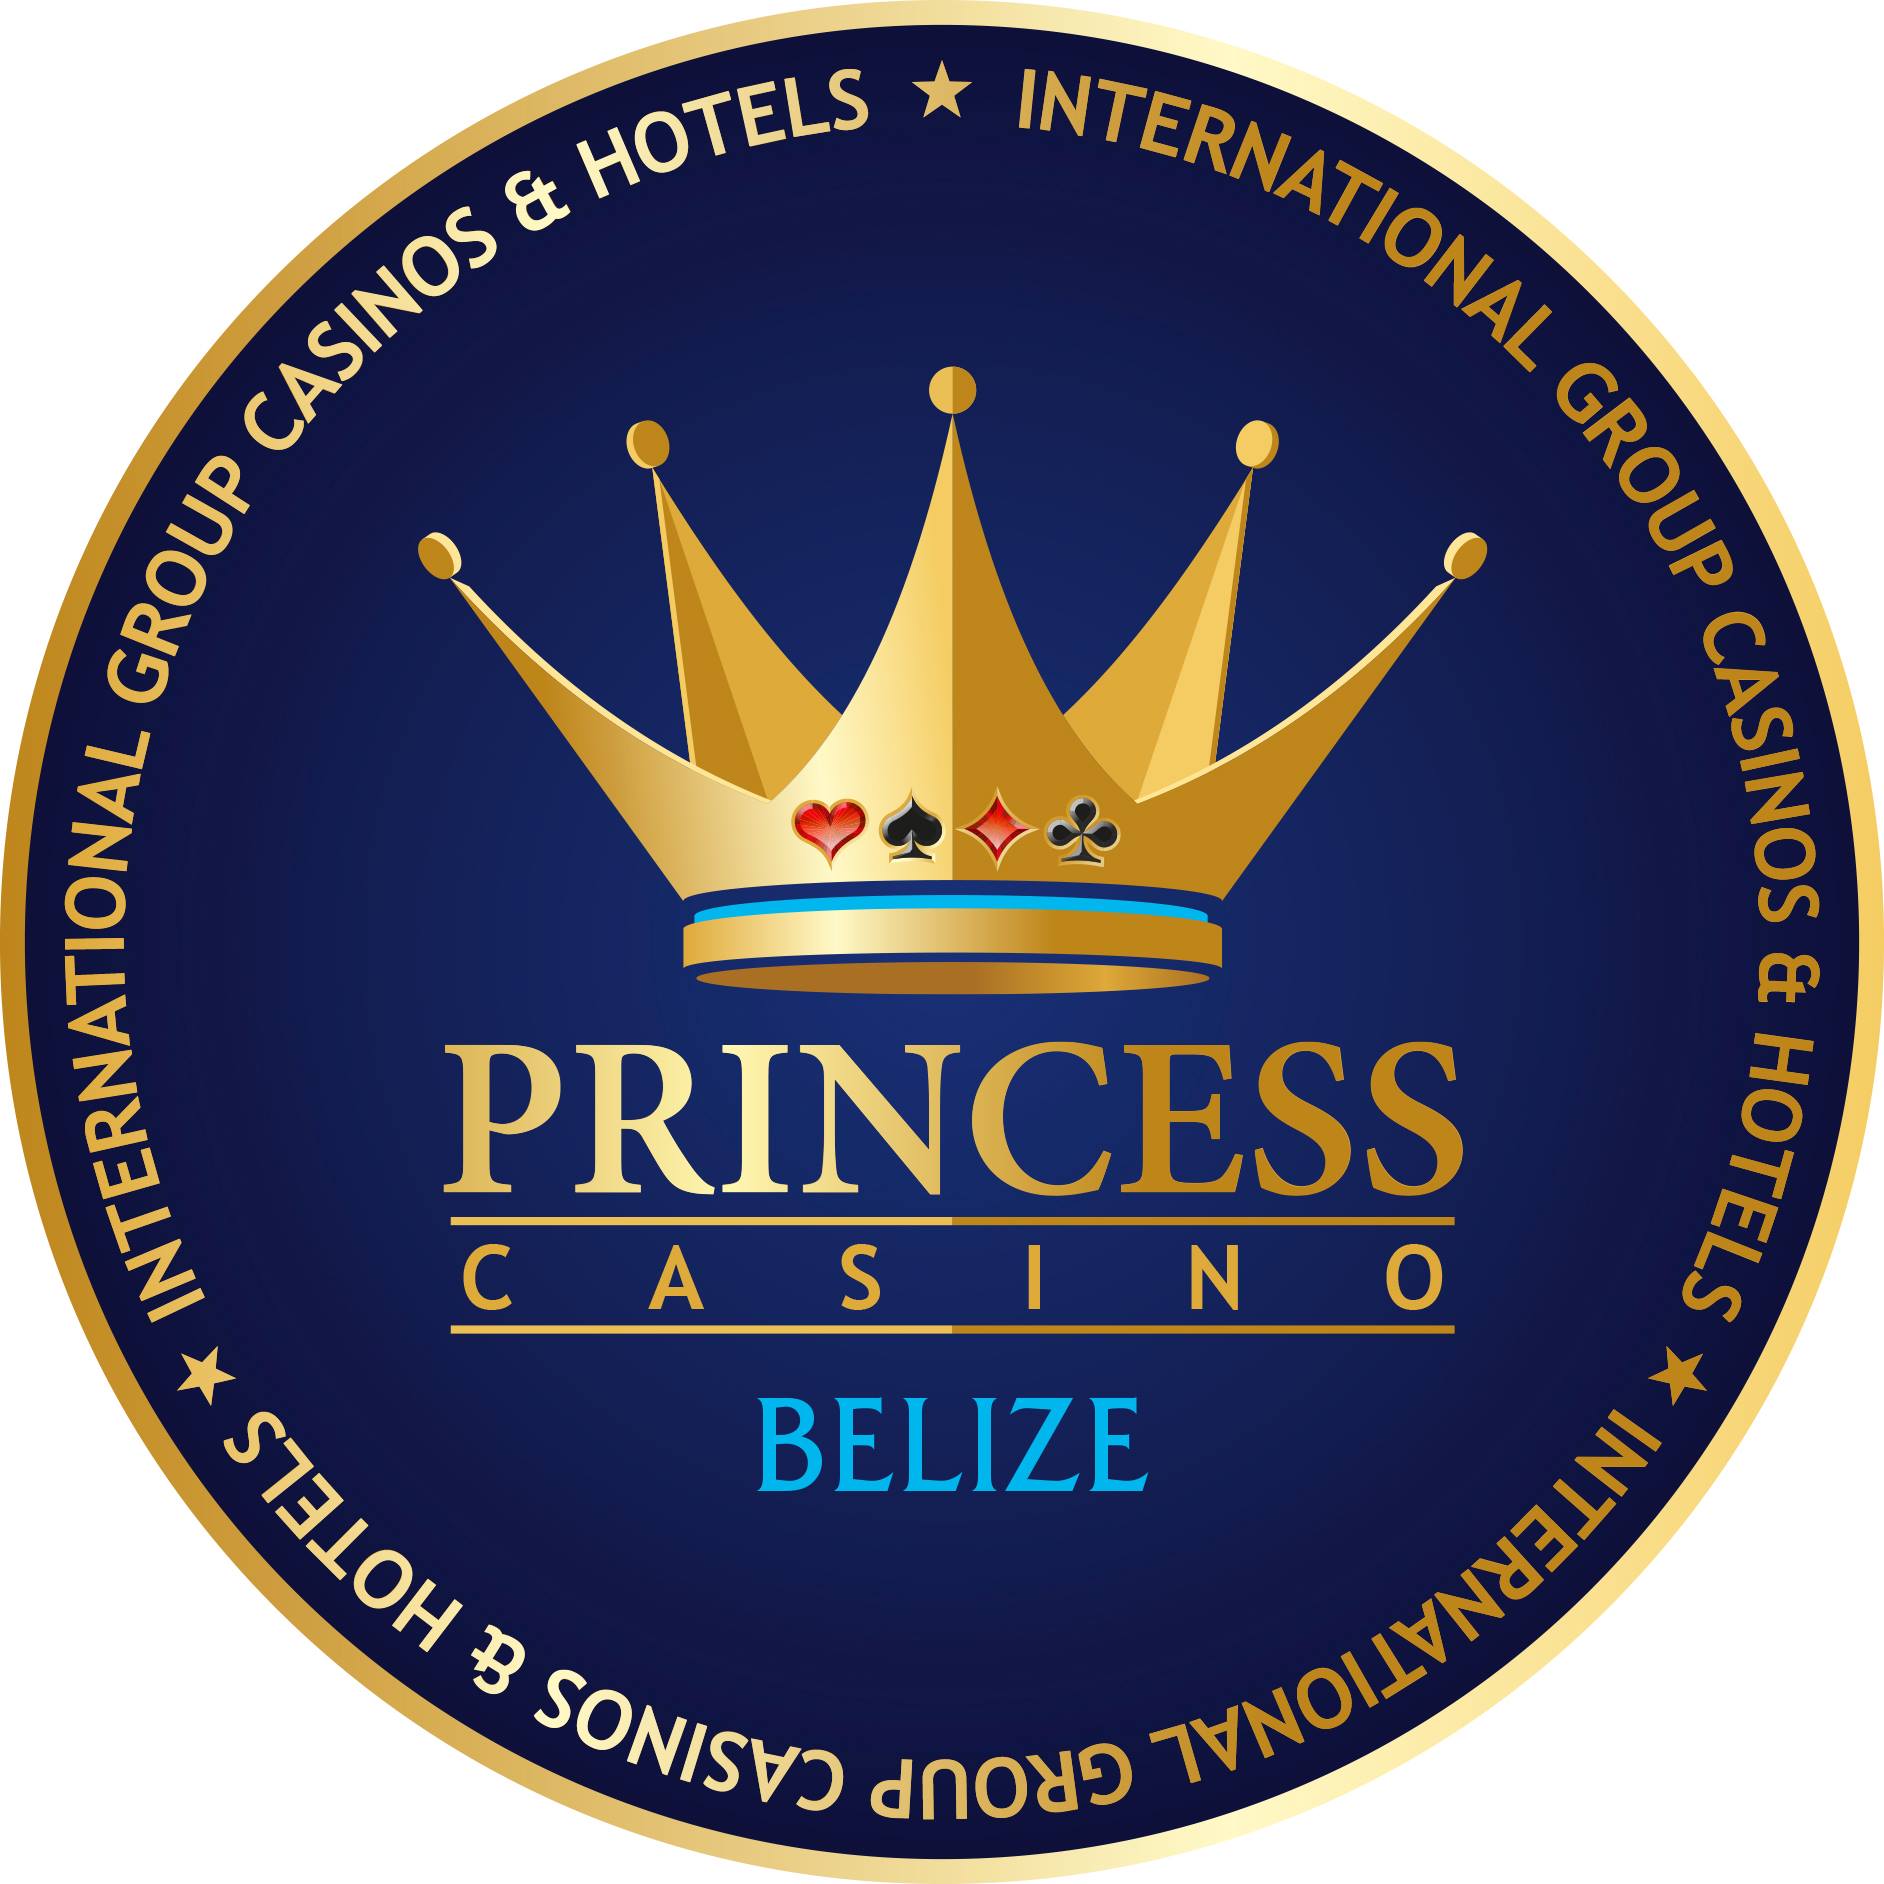 Princess Casino Belize - Belize, Central America